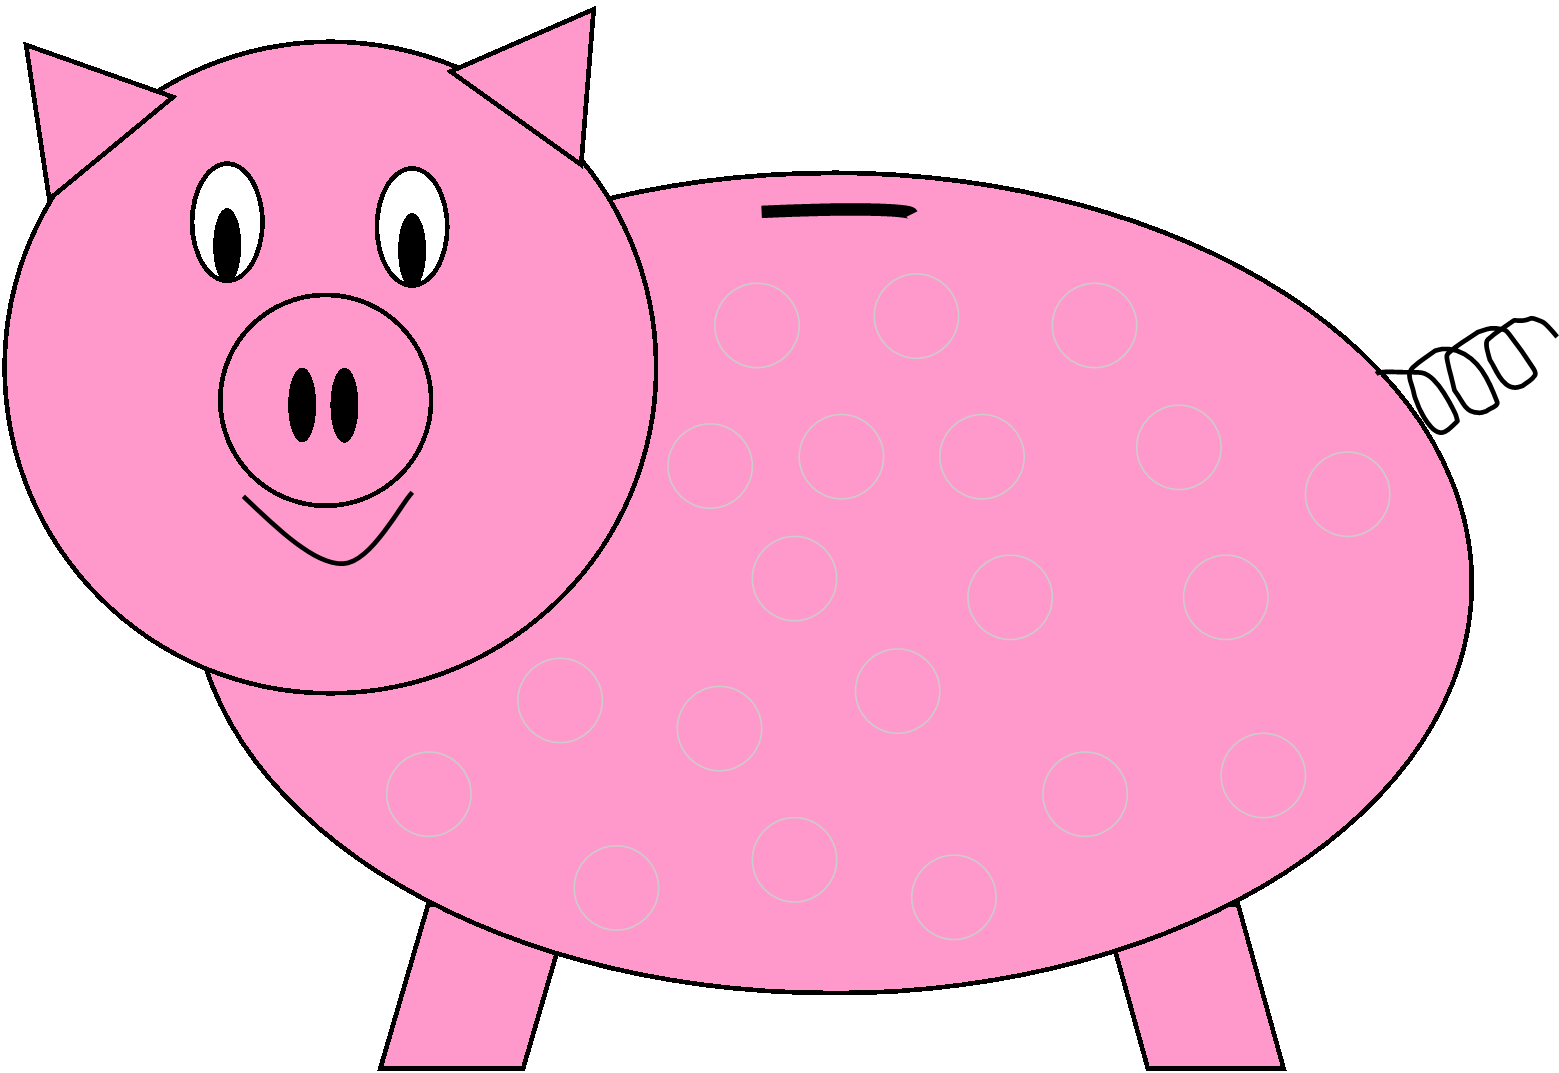 Piggy Bank Illustration On Be